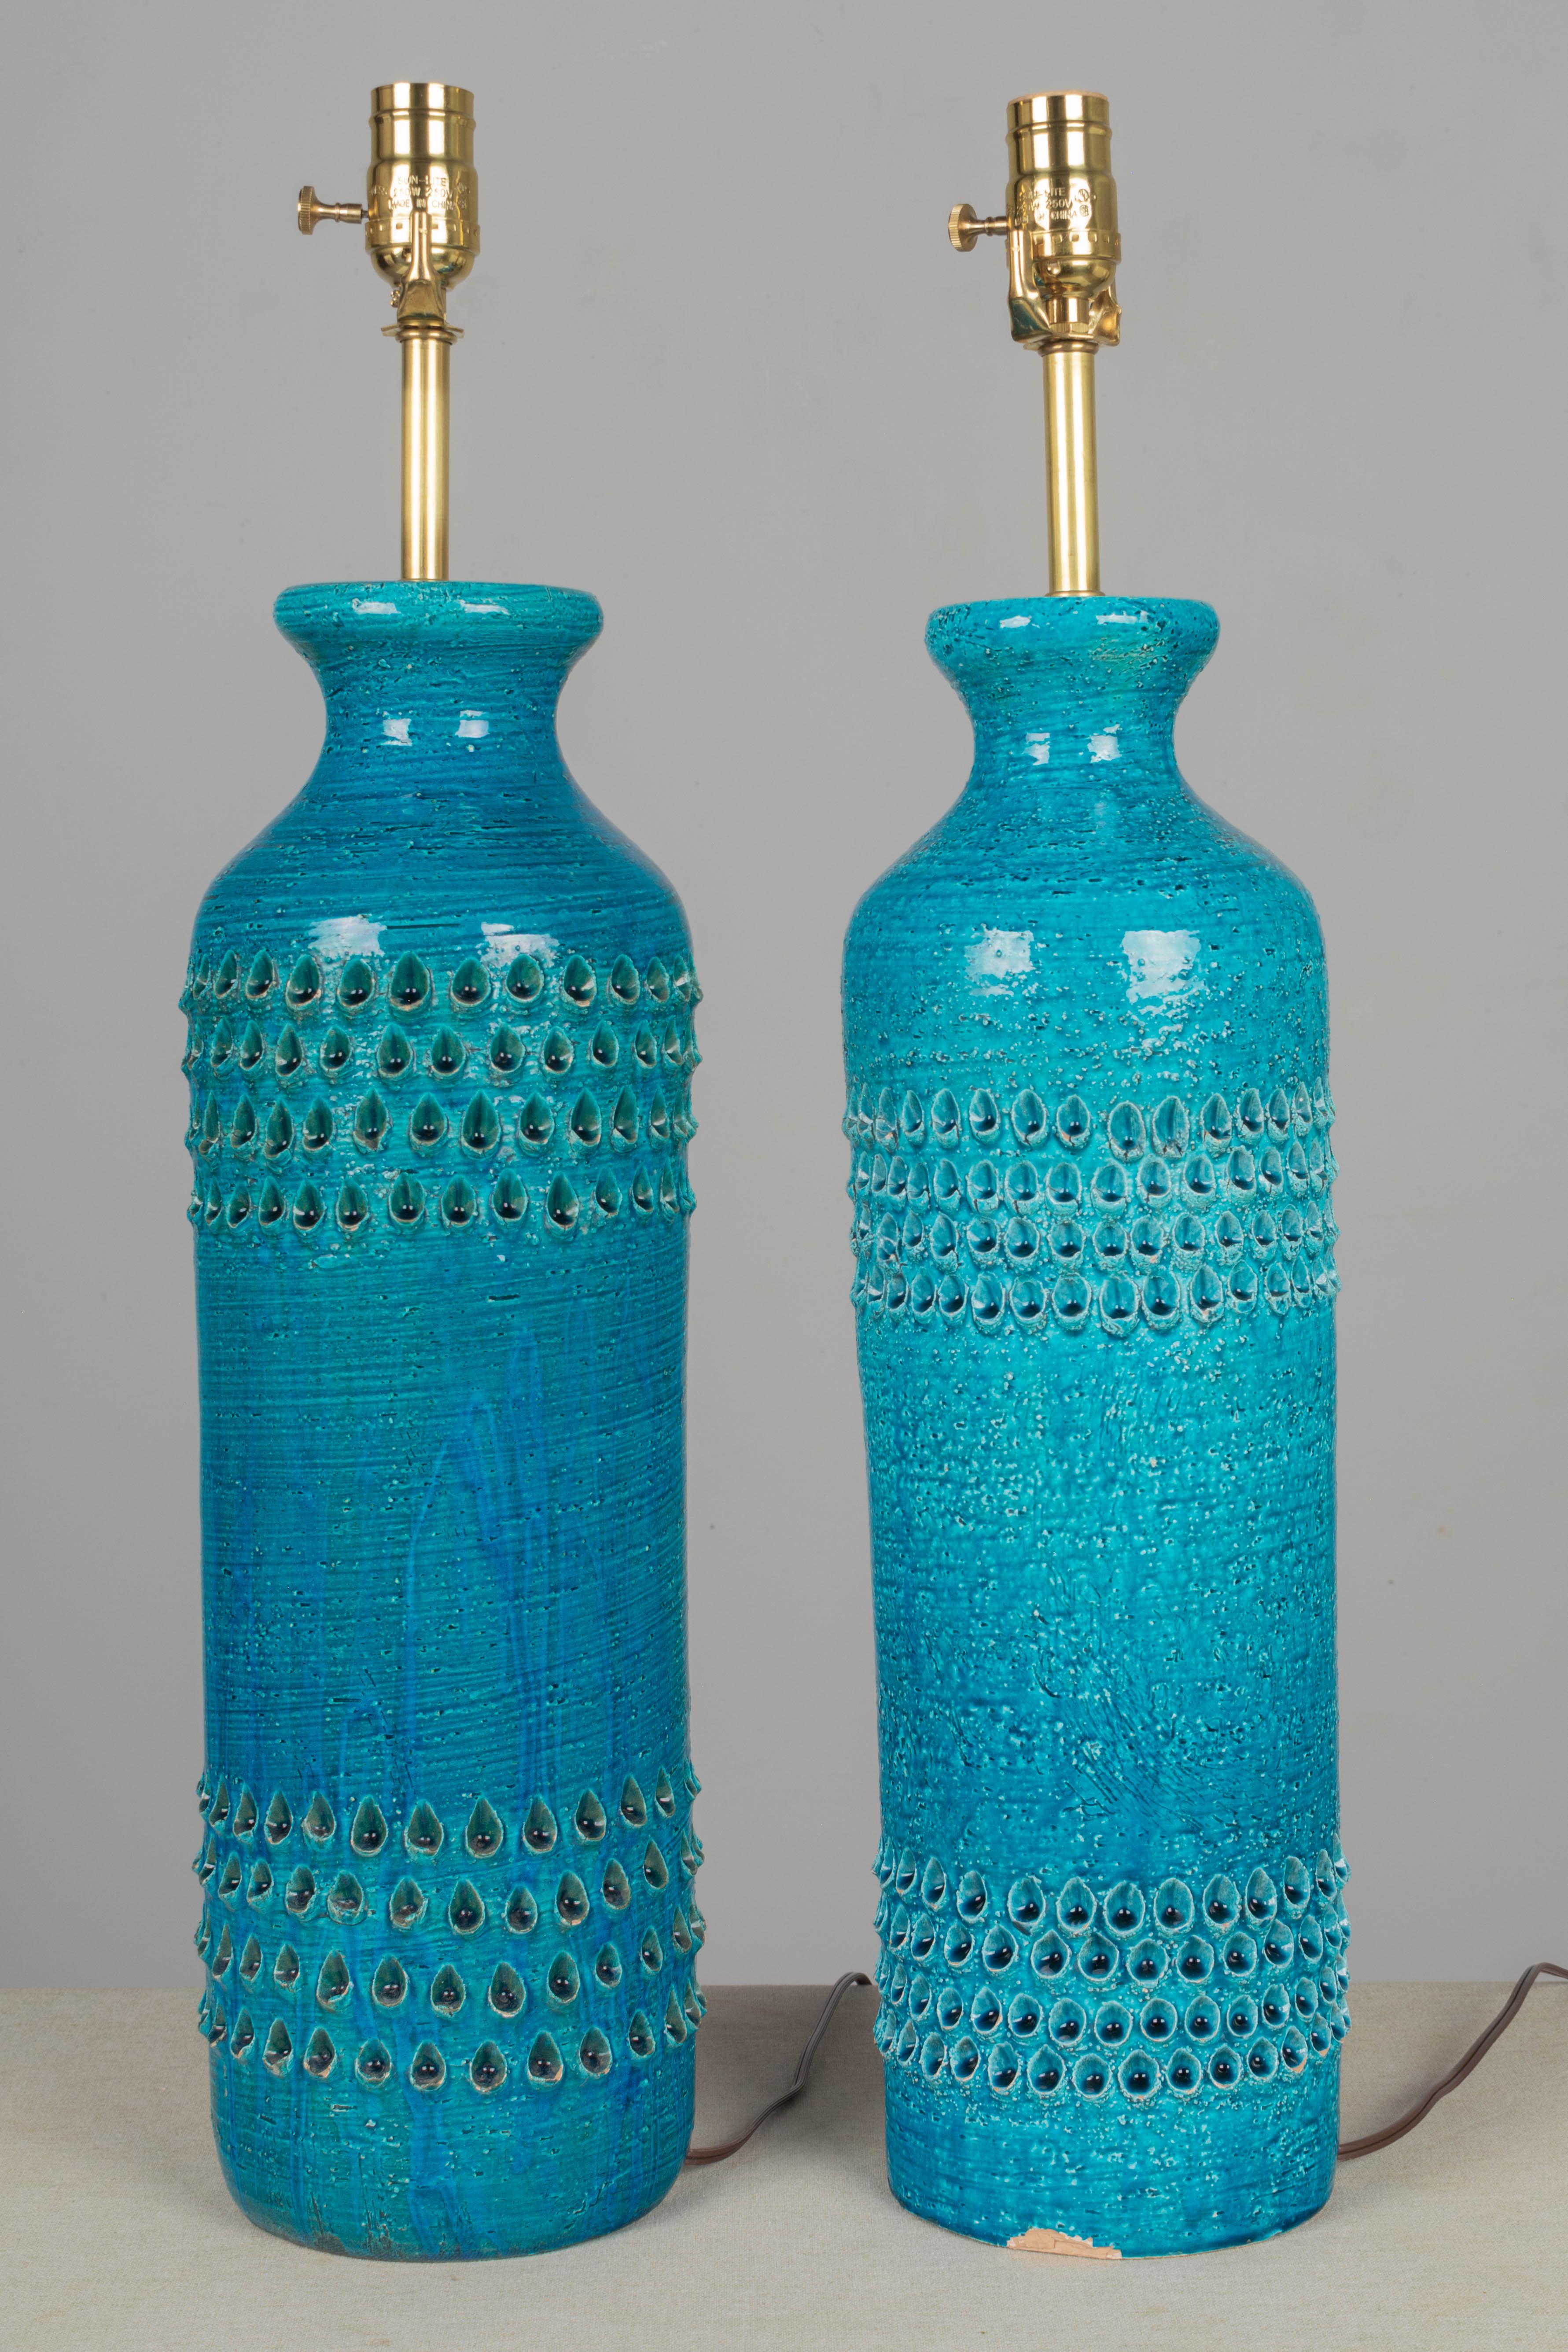 Ceramic Bistossi Aldo Londi Pottery Lamps, Pair